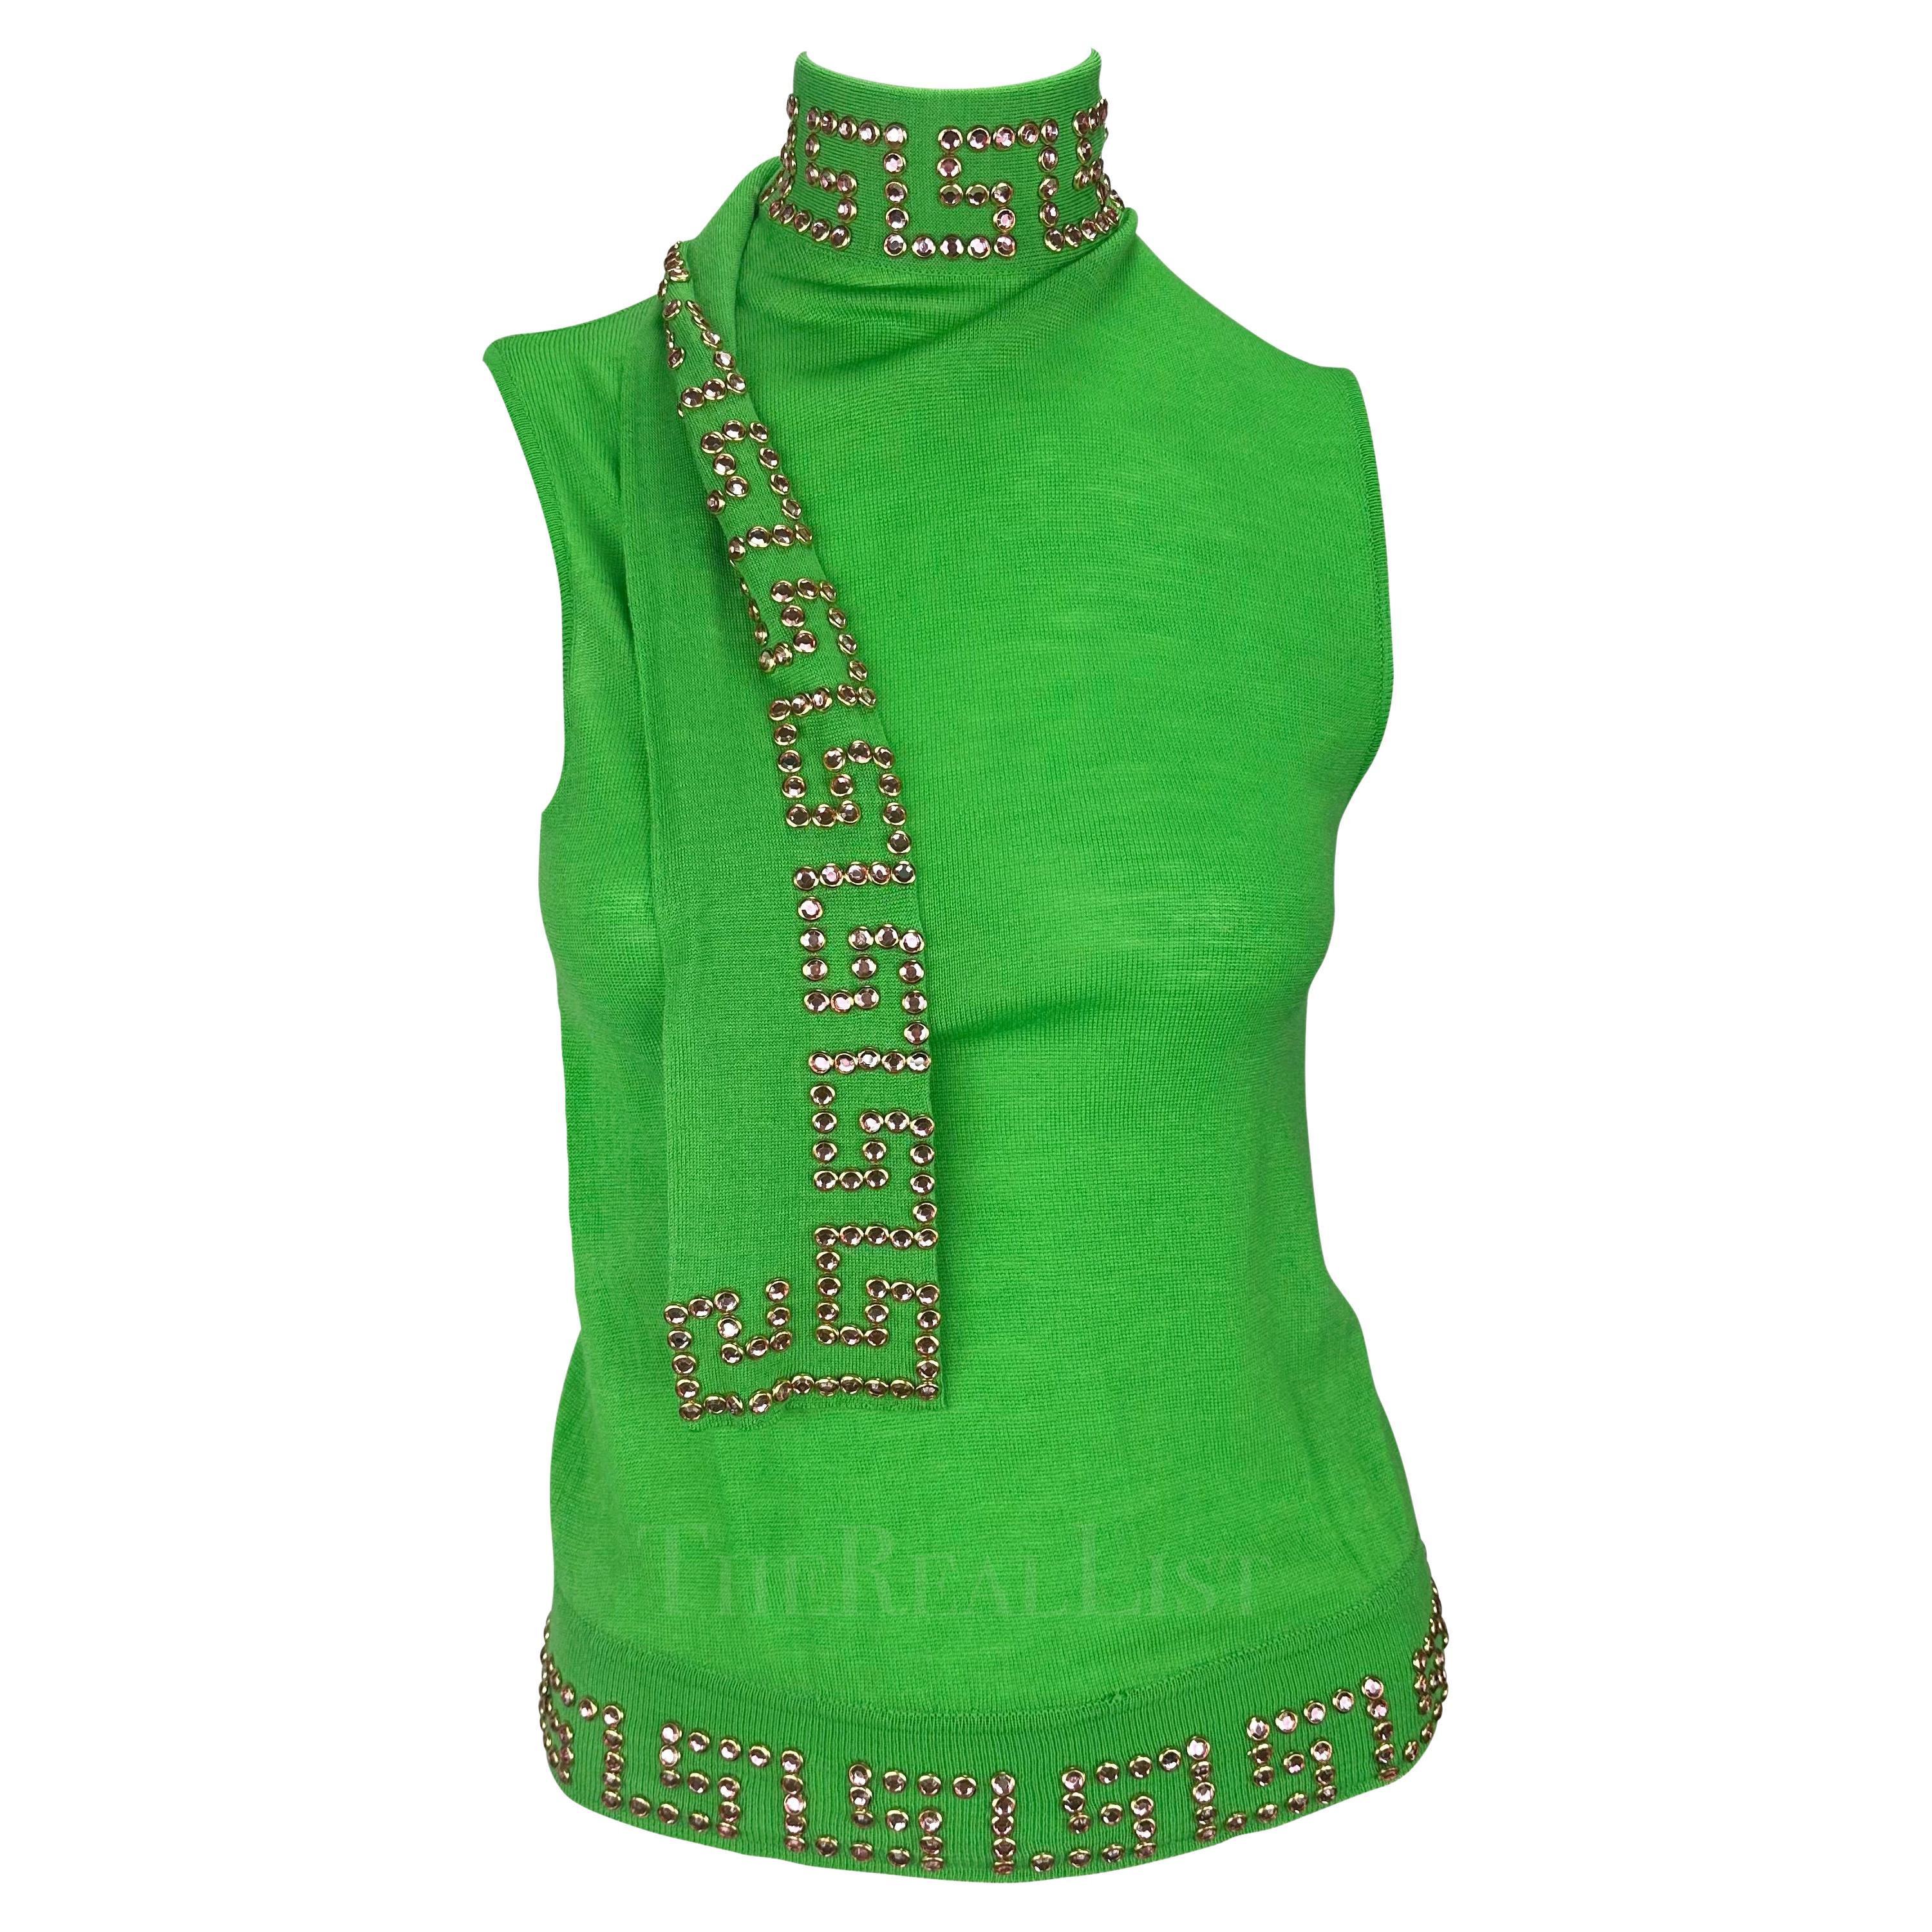 S/S 2000 Gianni Versace by Donatella Runway Green Rhinestone Greek Key Knit Top For Sale